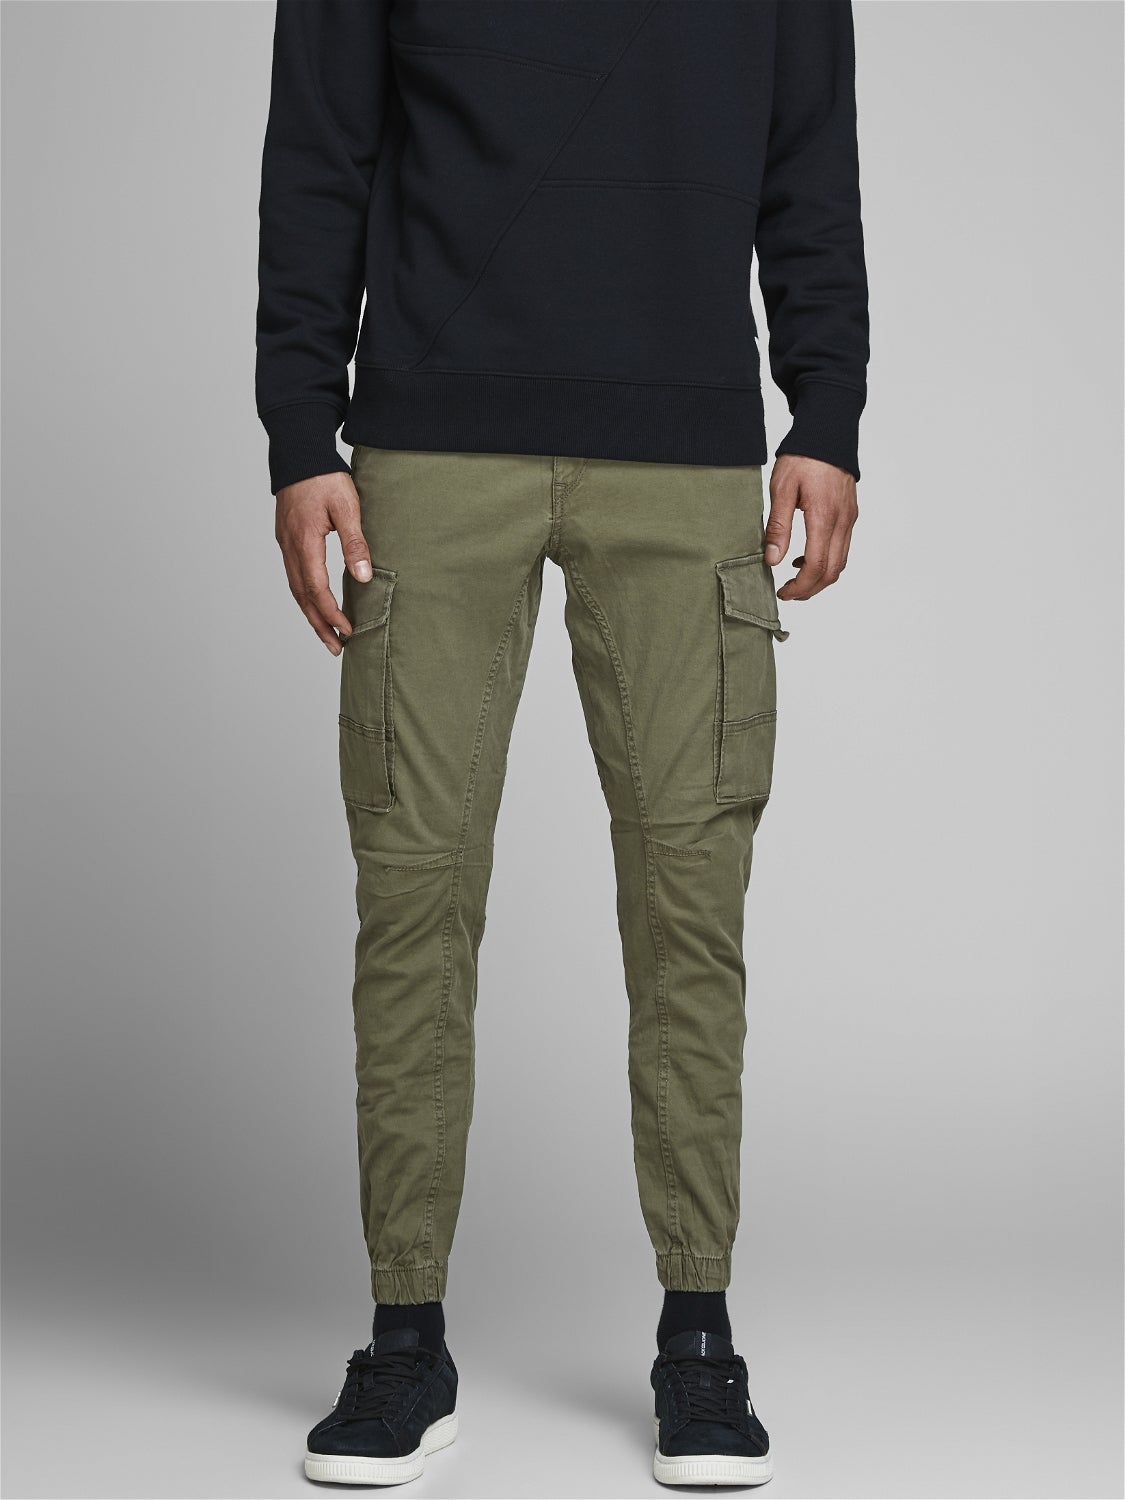 Blue L Jack & Jones slacks discount 57% MEN FASHION Trousers Elegant 